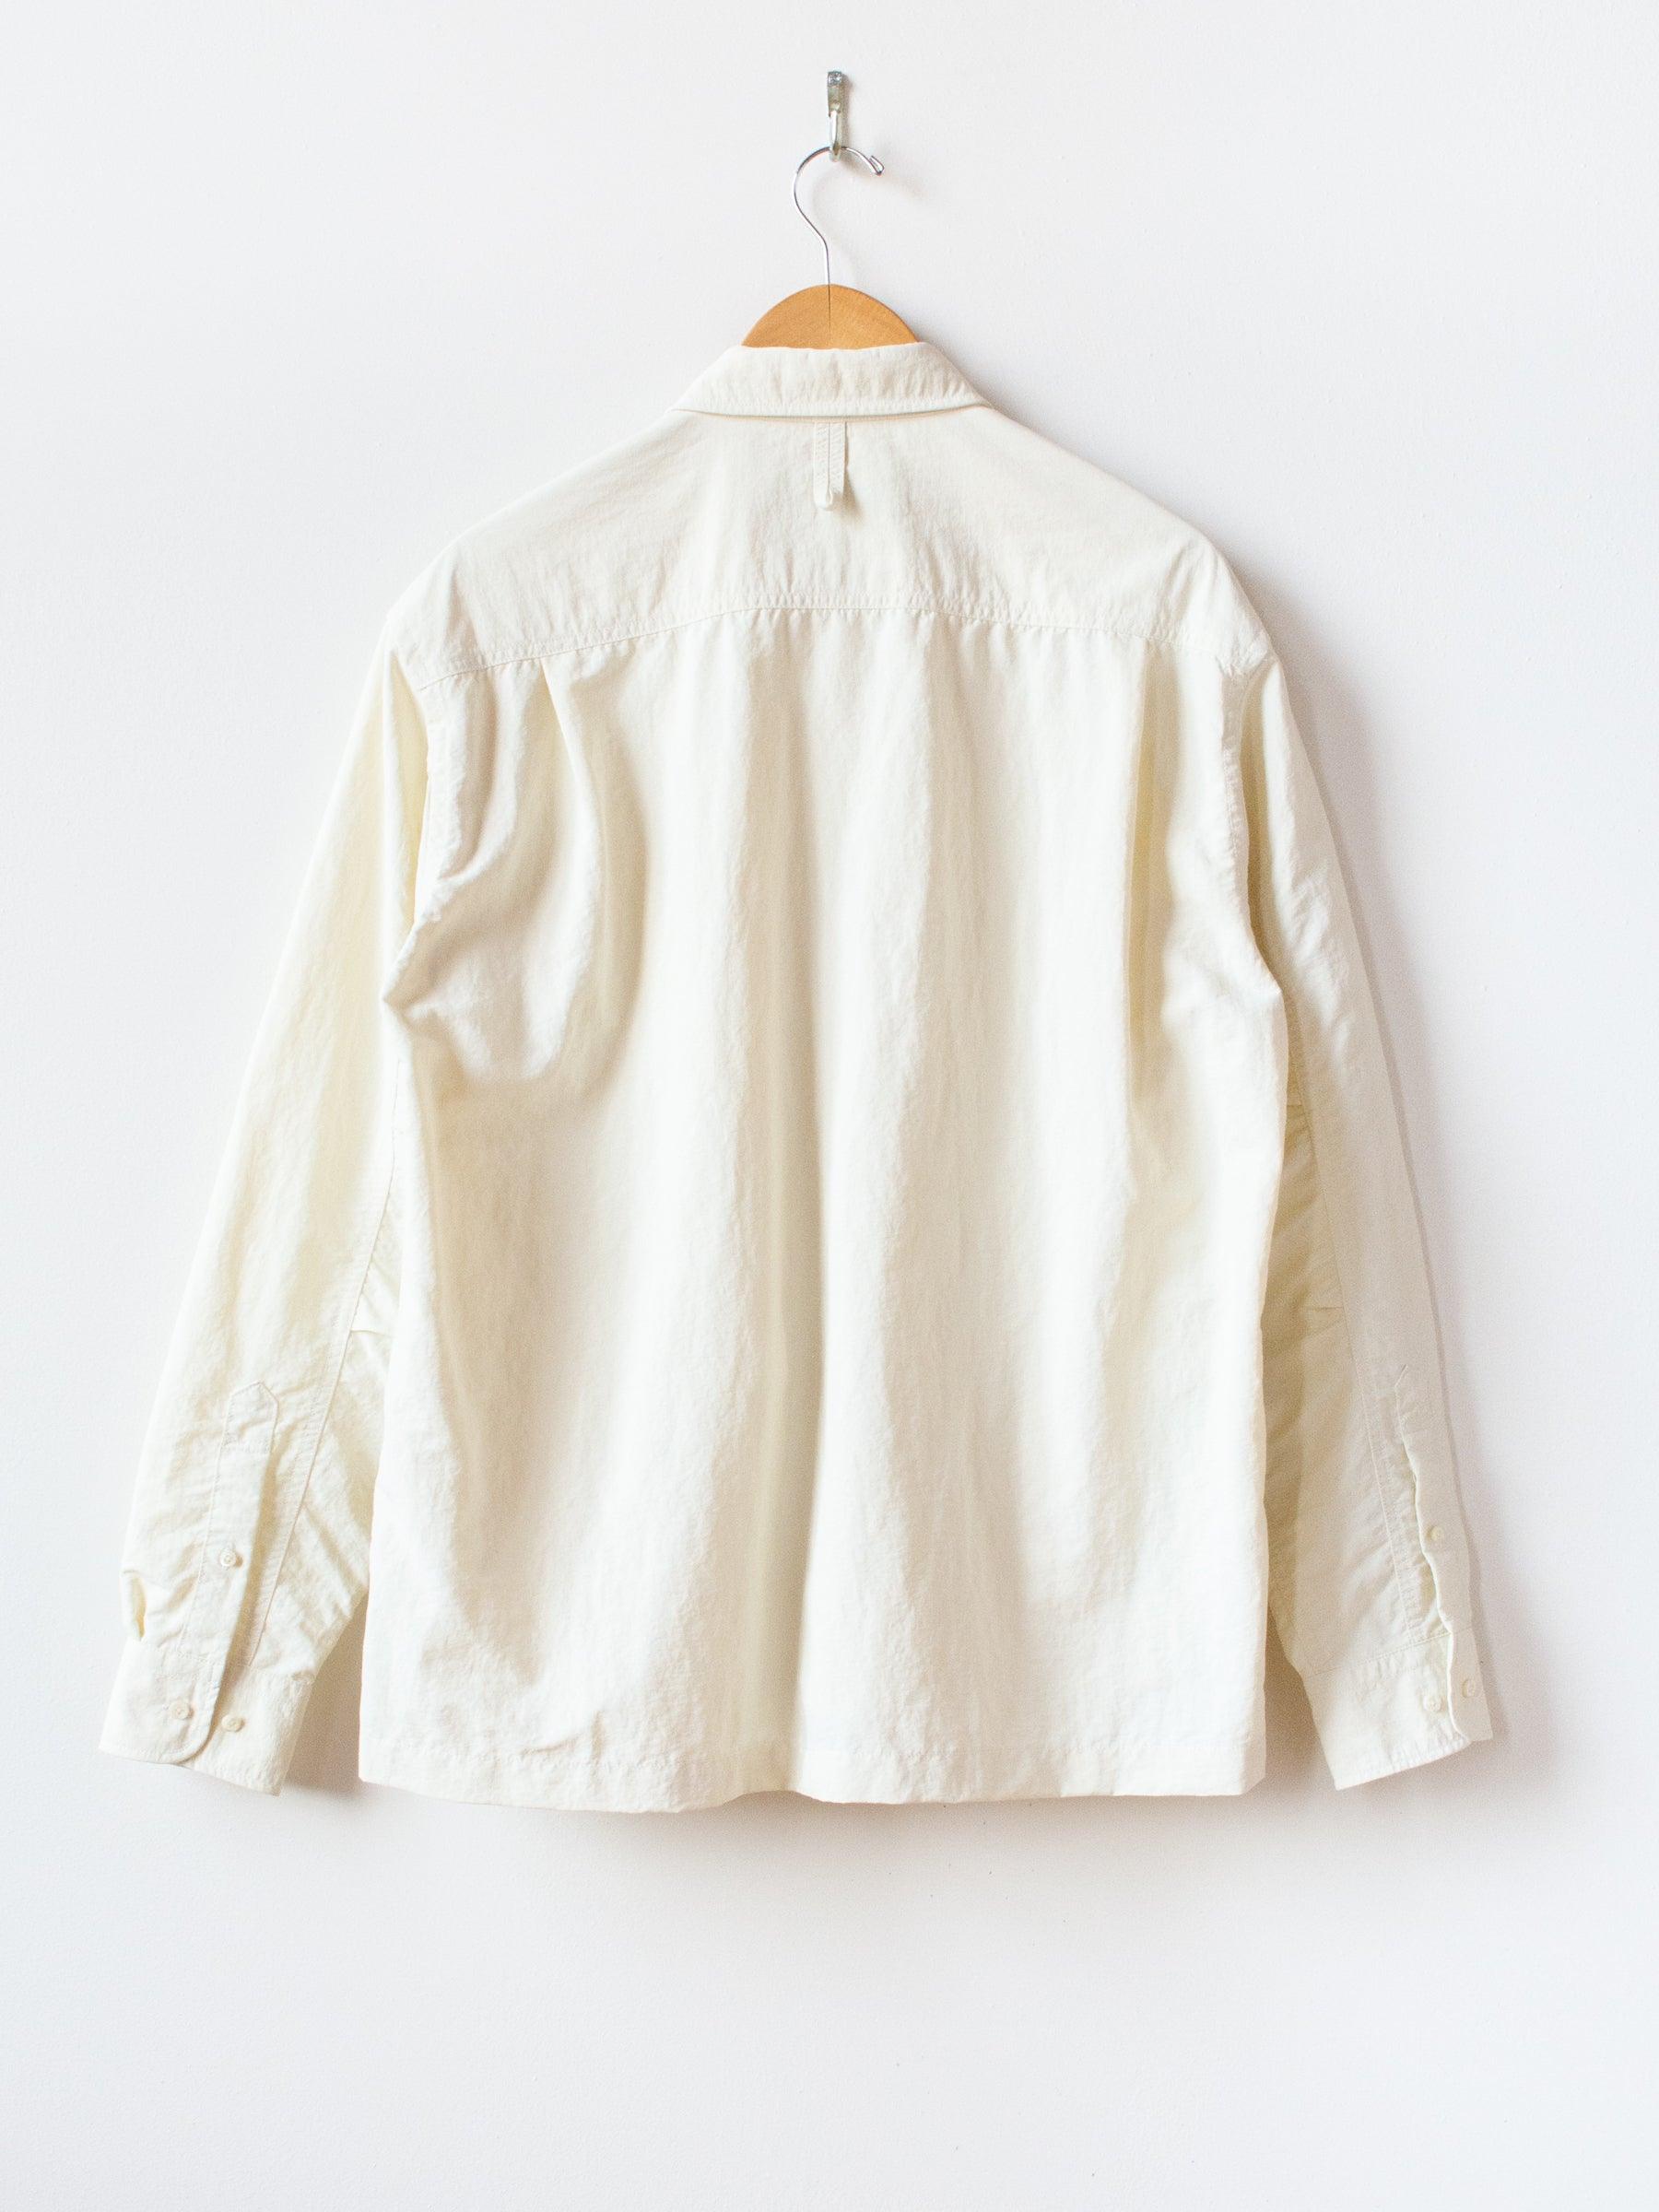 Namu Shop - Eastlogue M65 Shirt - Off White Nylon Washer